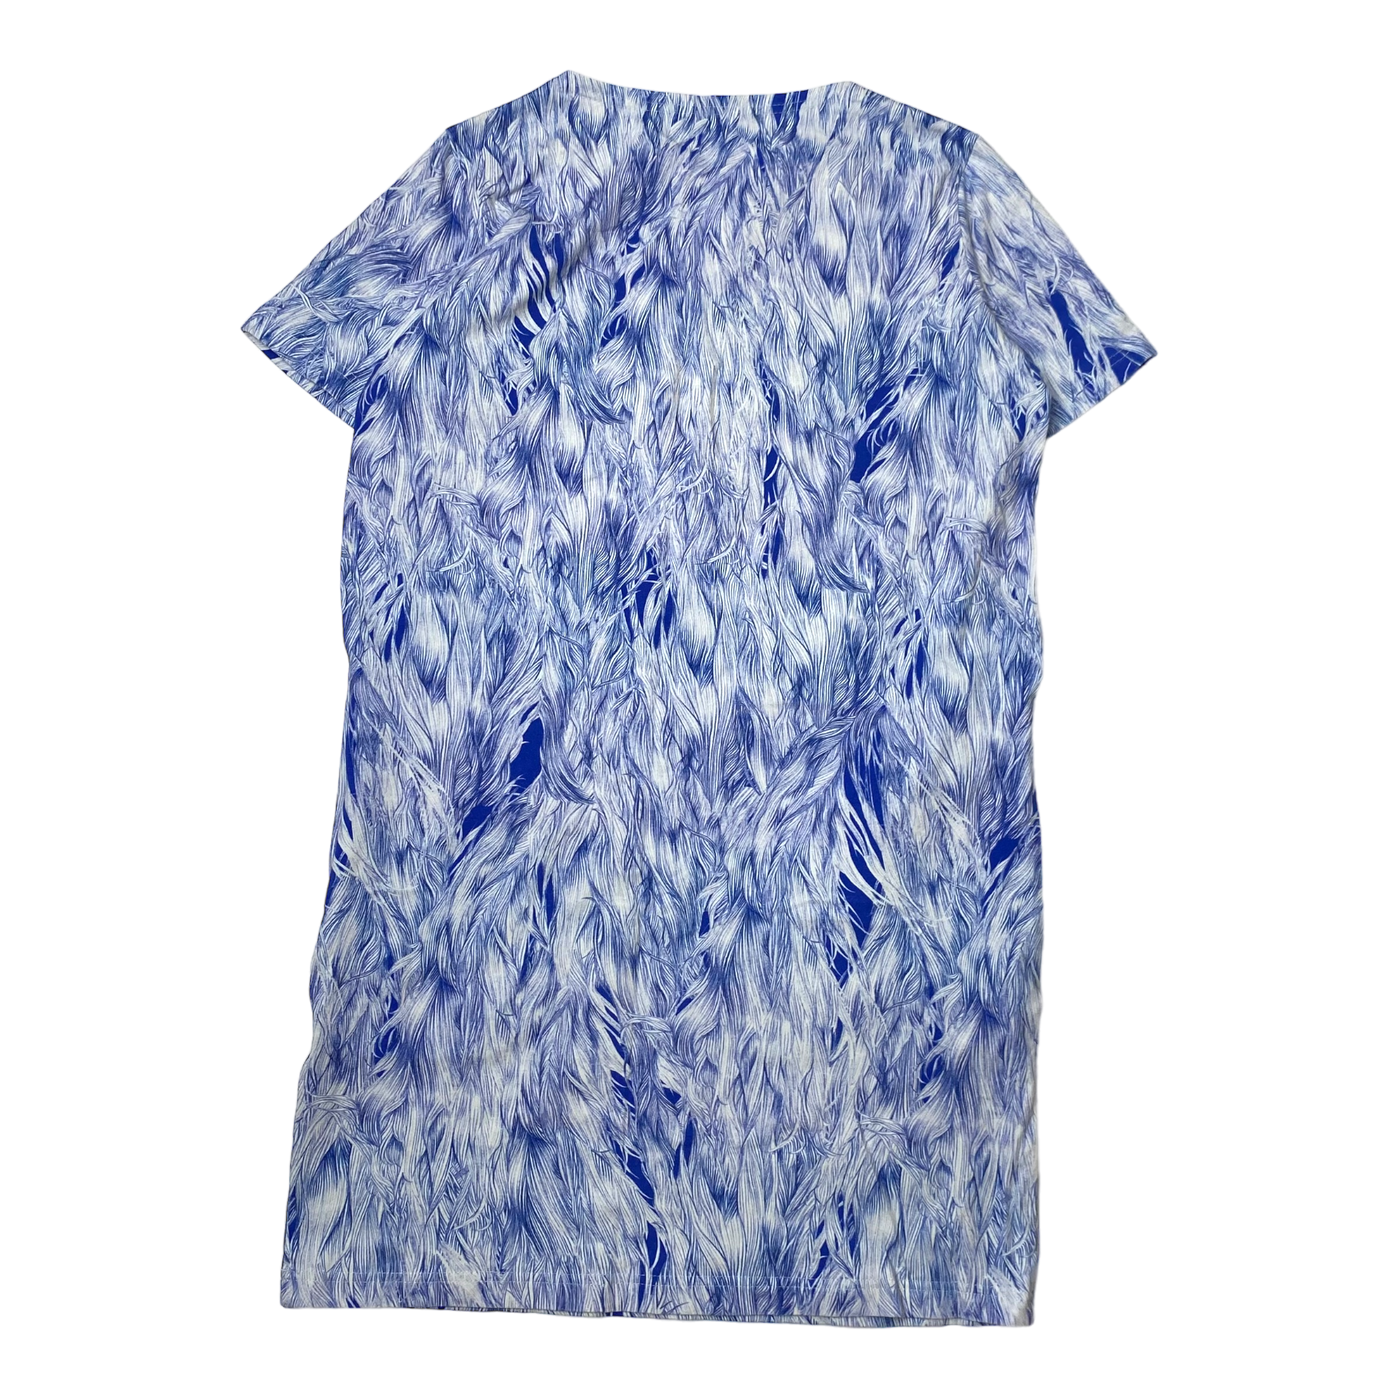 Vimma dress, white and blue | 140cm